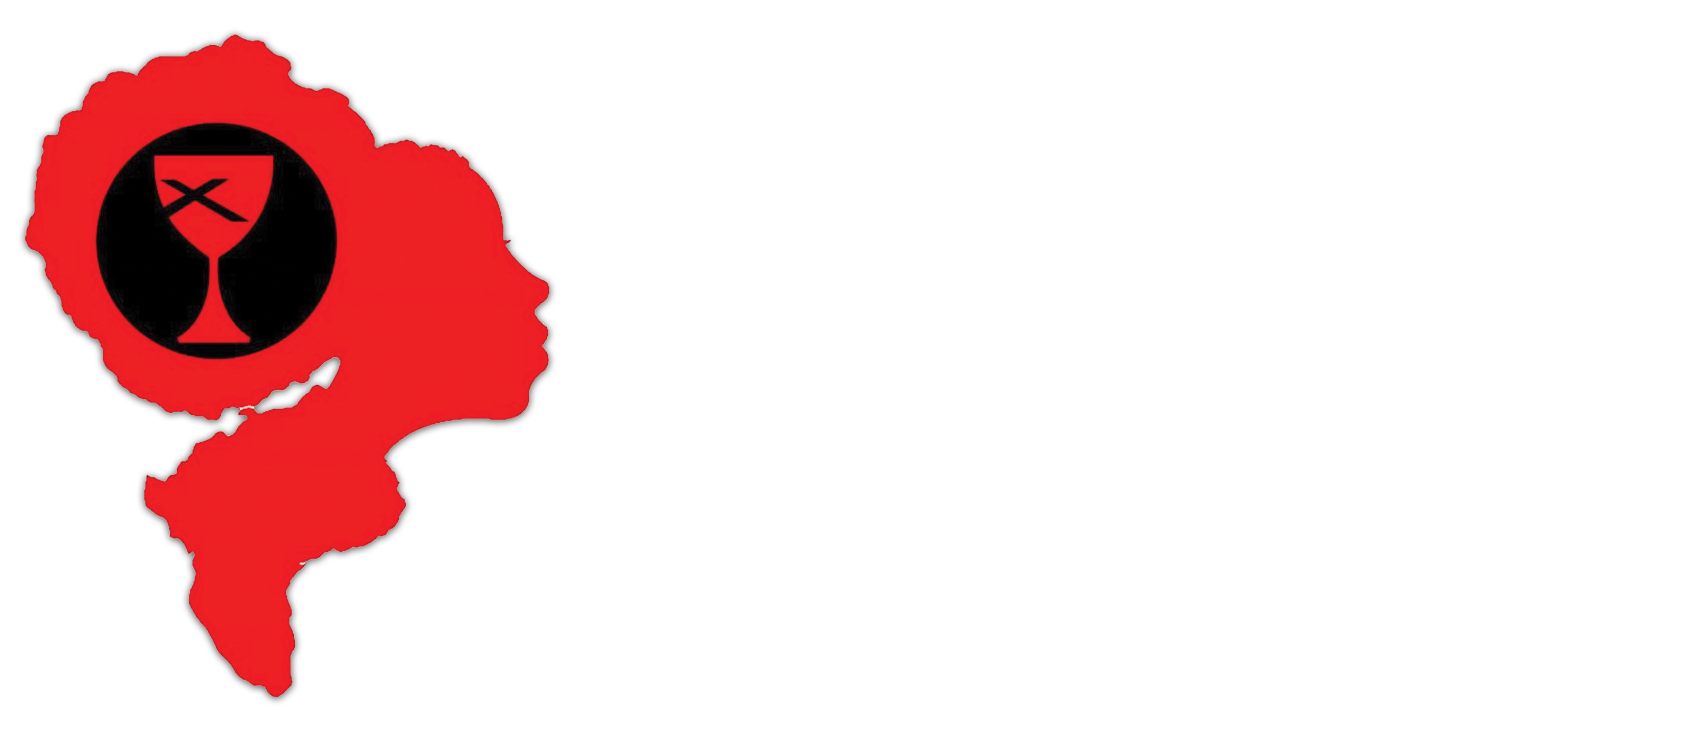 Black Disciples Clergywomen